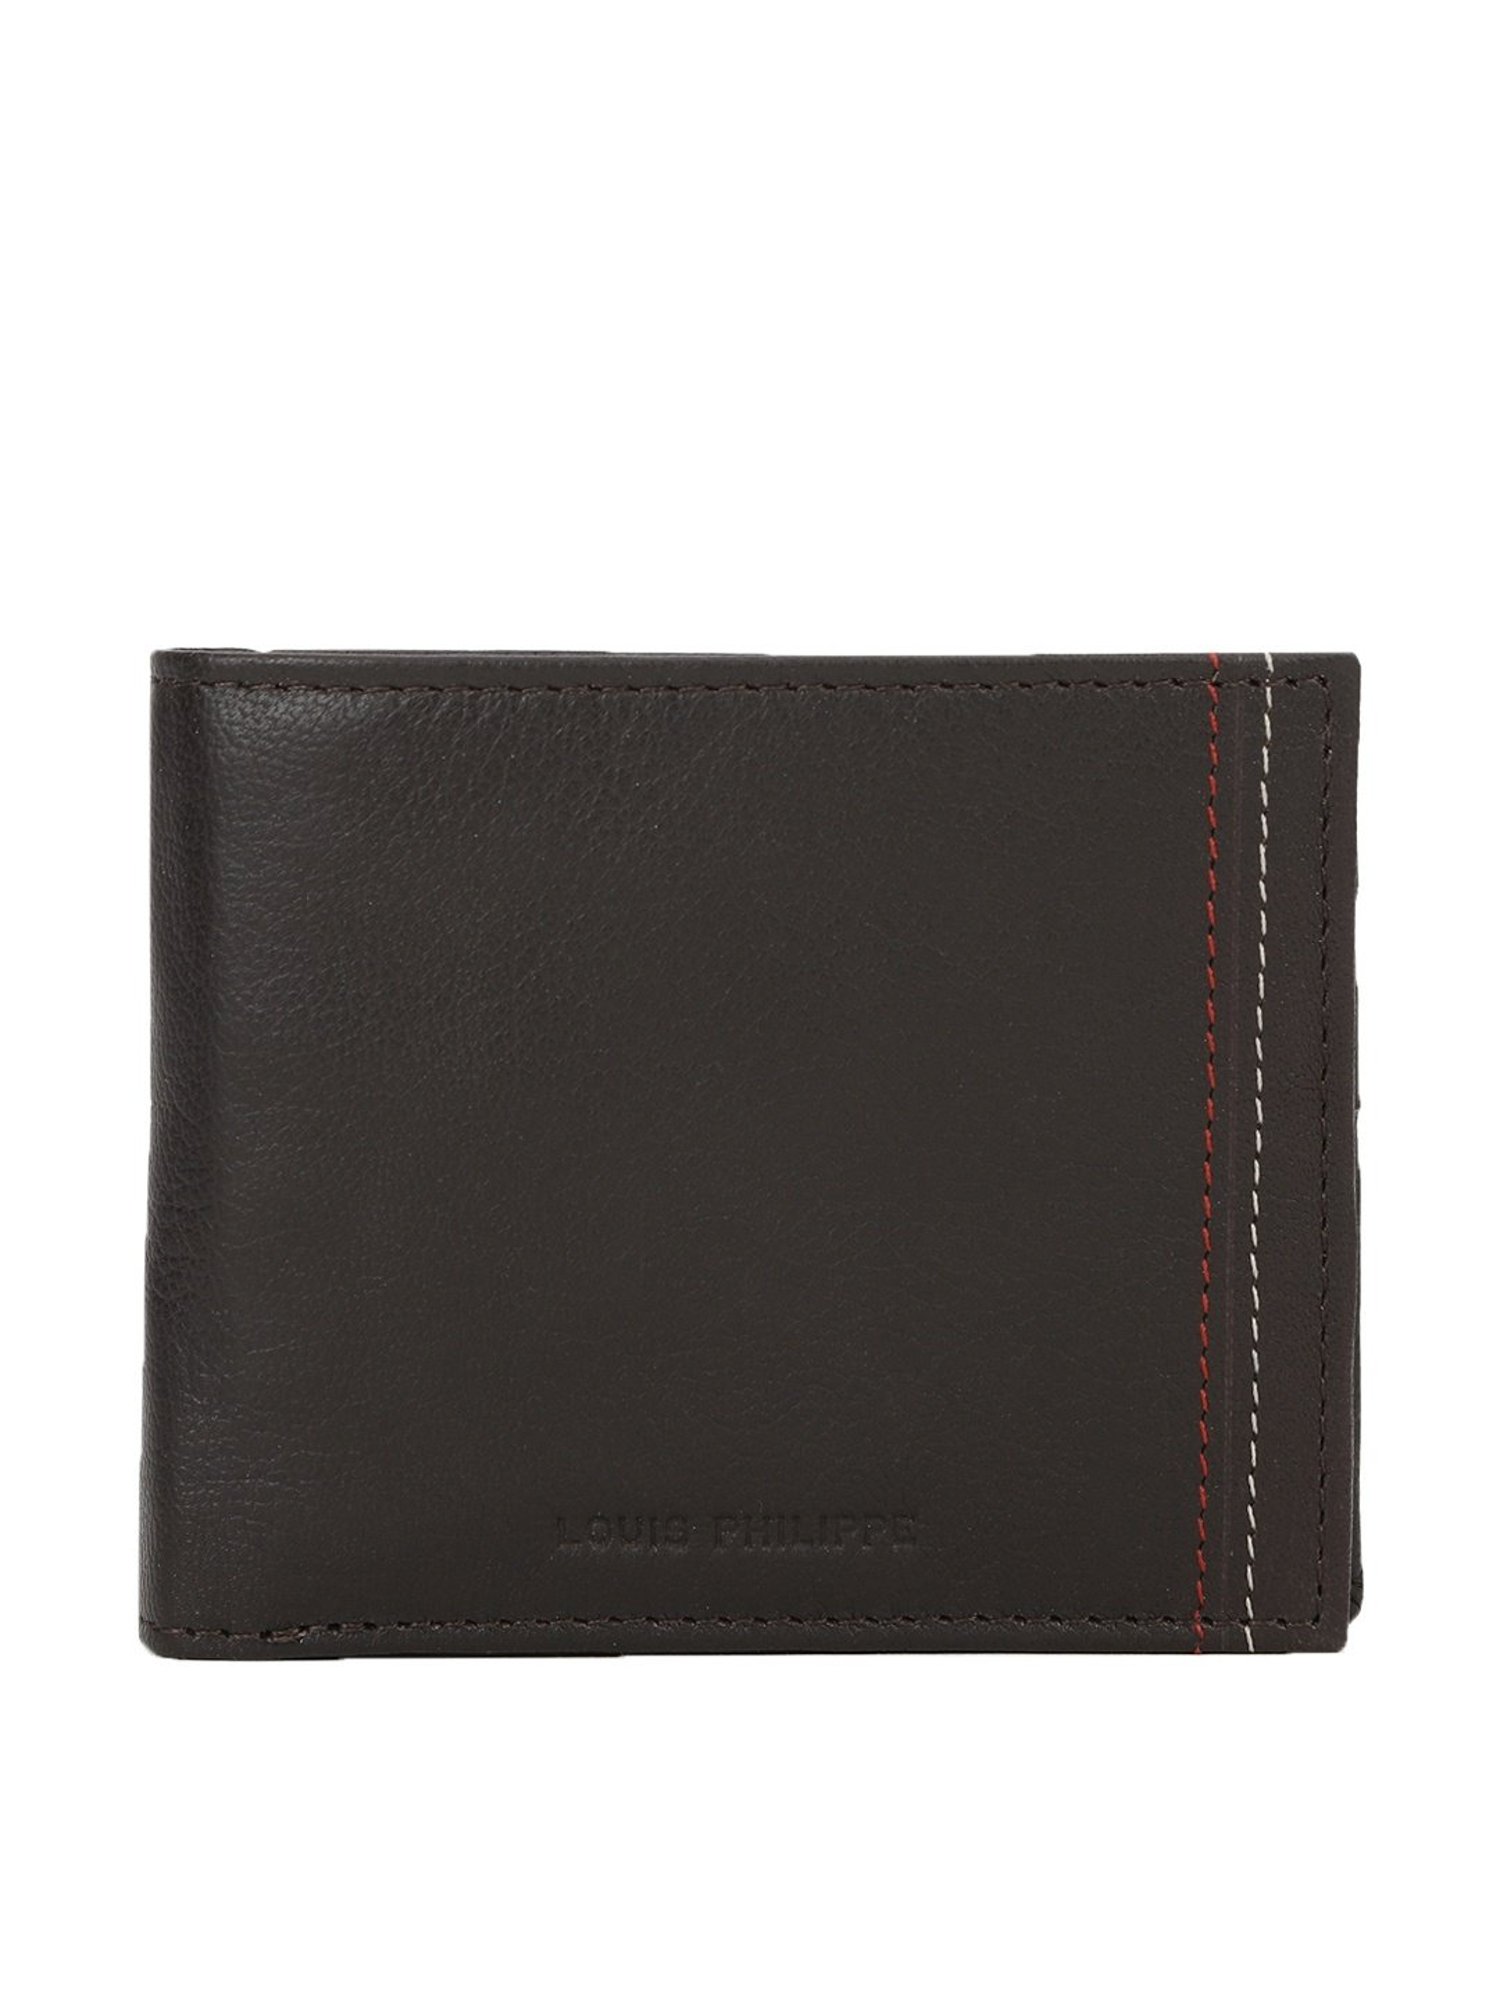 Buy Louis Philippe Men Black Leather Bi-Fold Wallet Online at Low